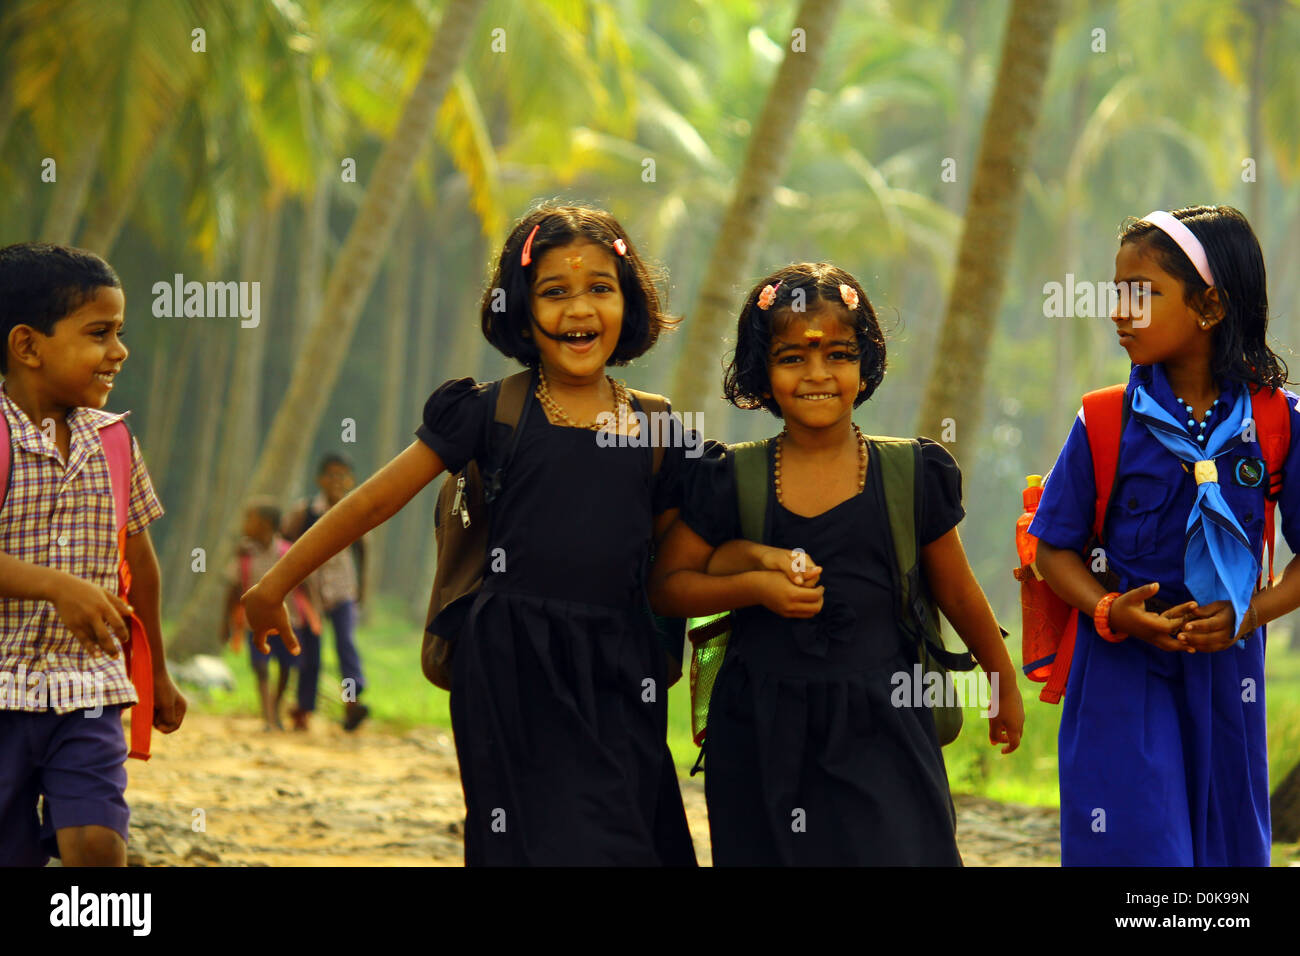 Rural india - Children going to school Stock Photo